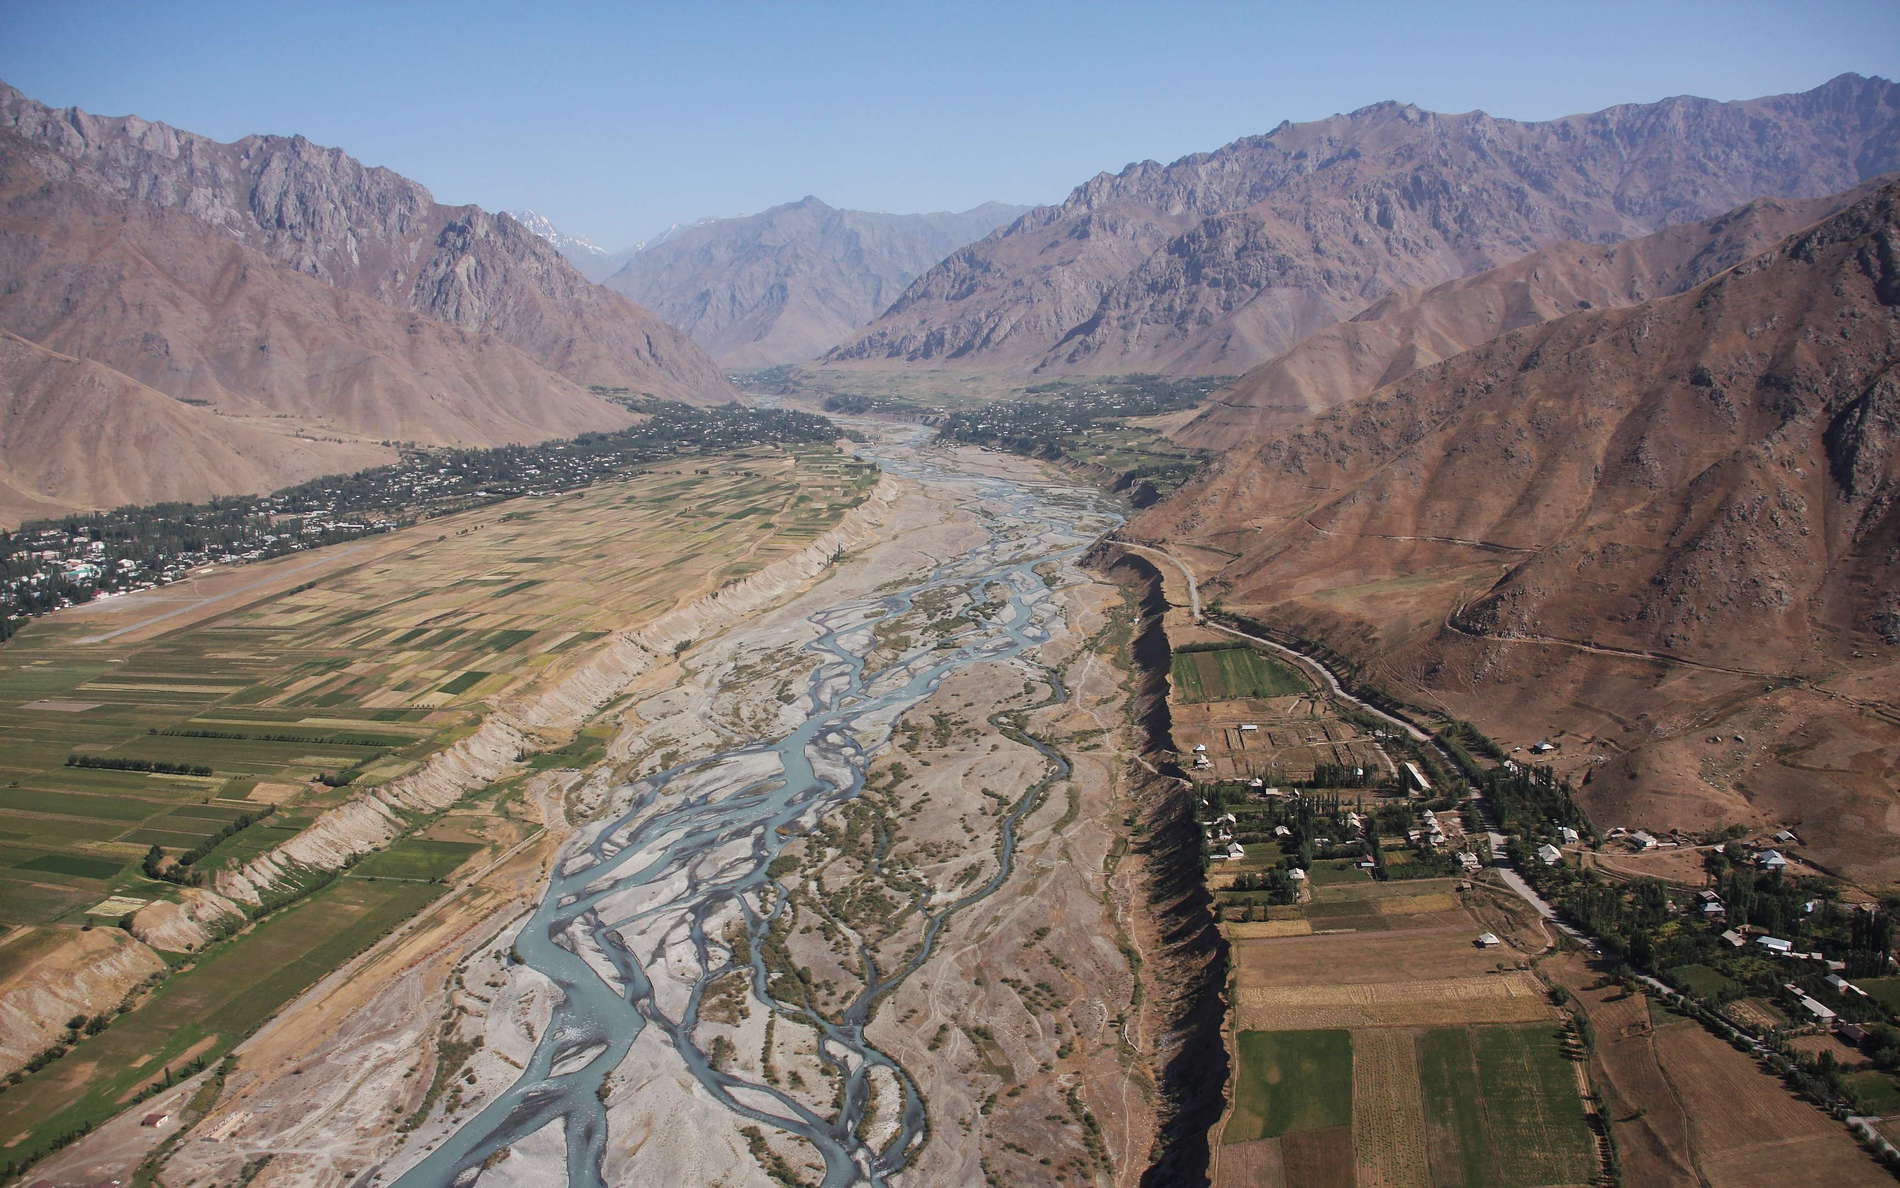 Jirgatol  |  Koksu River